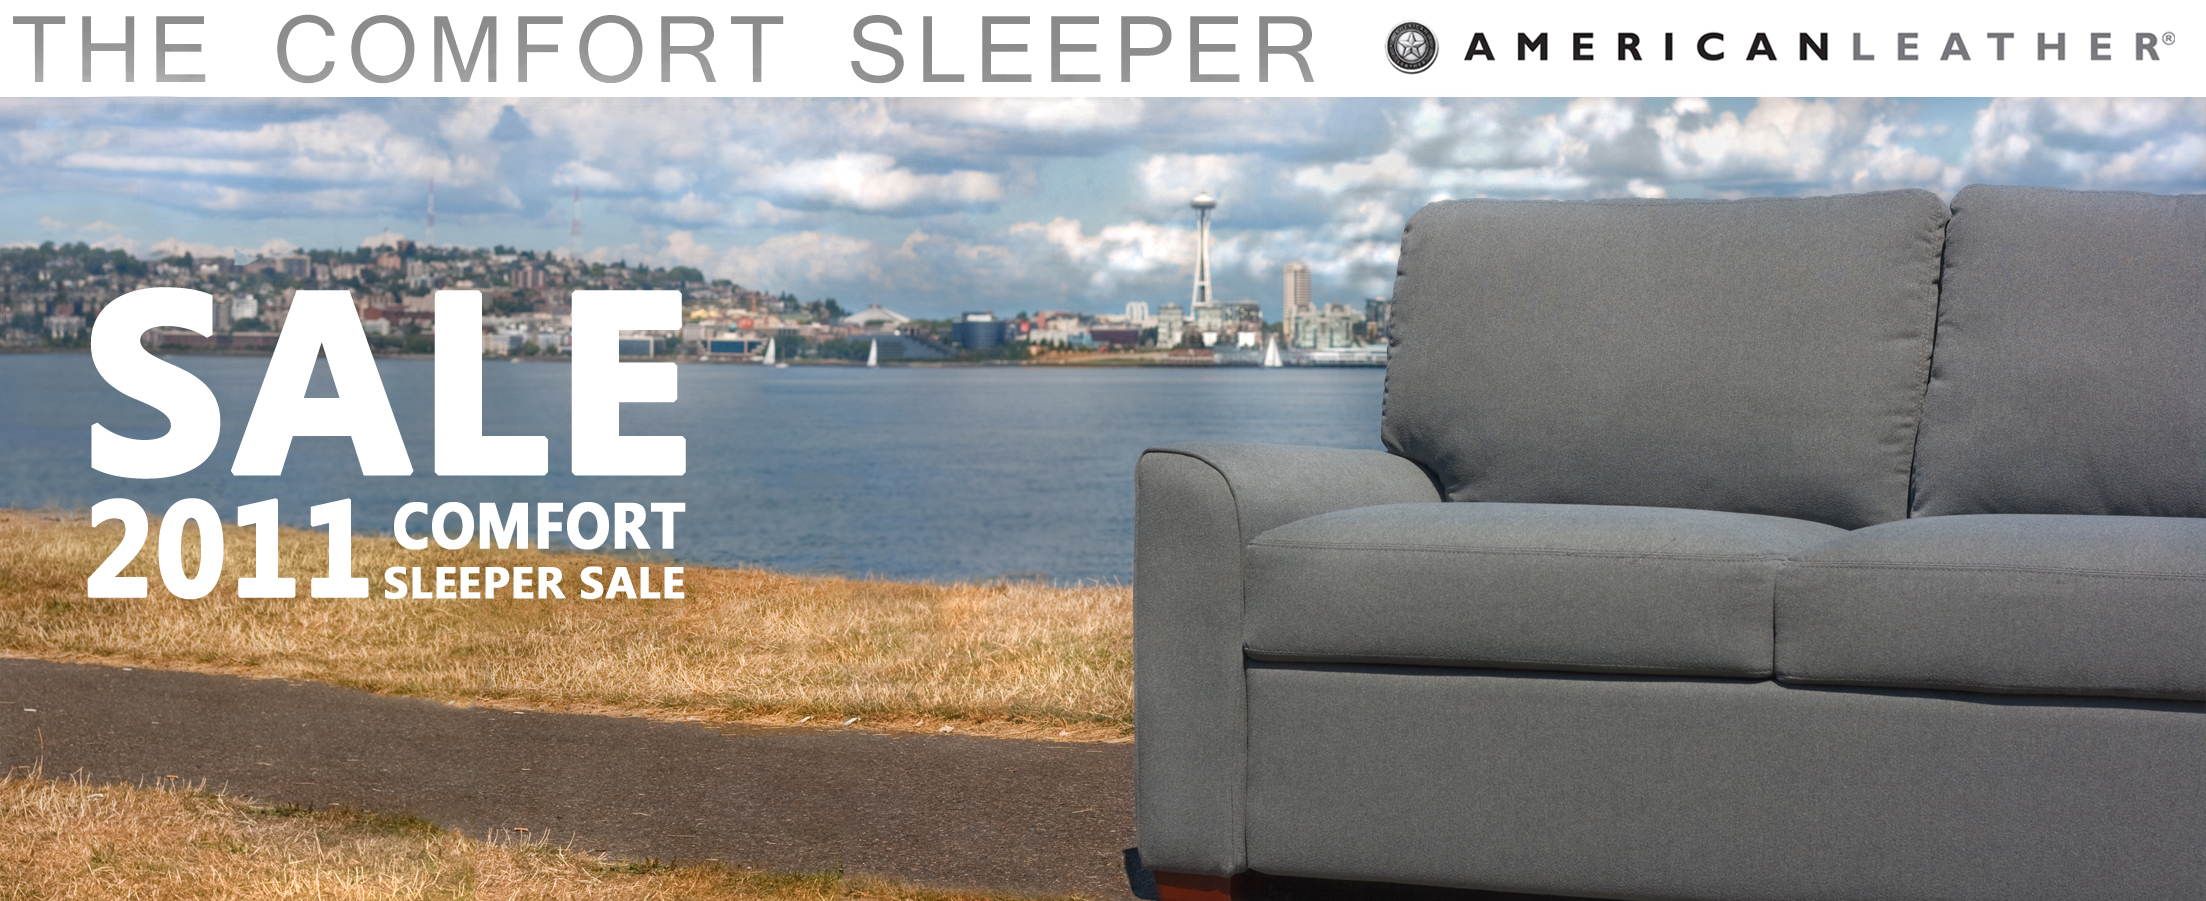 The Comfort Sleeper Sale is on now